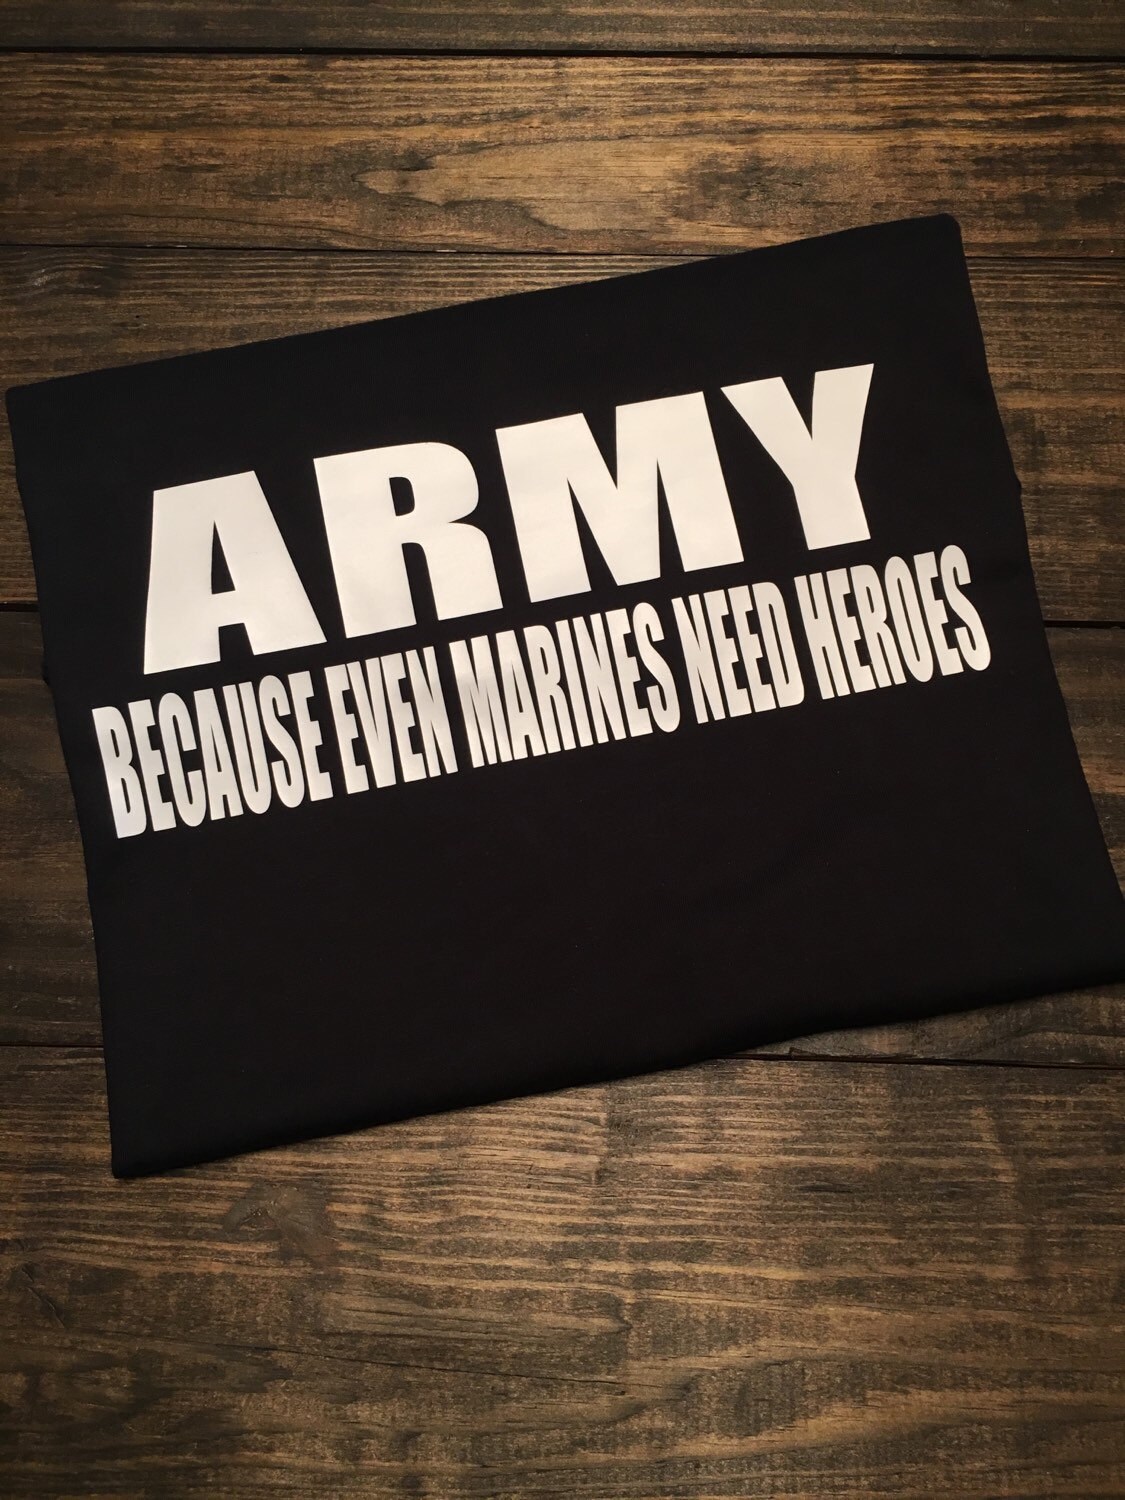 Army Because Marines Need Heroes